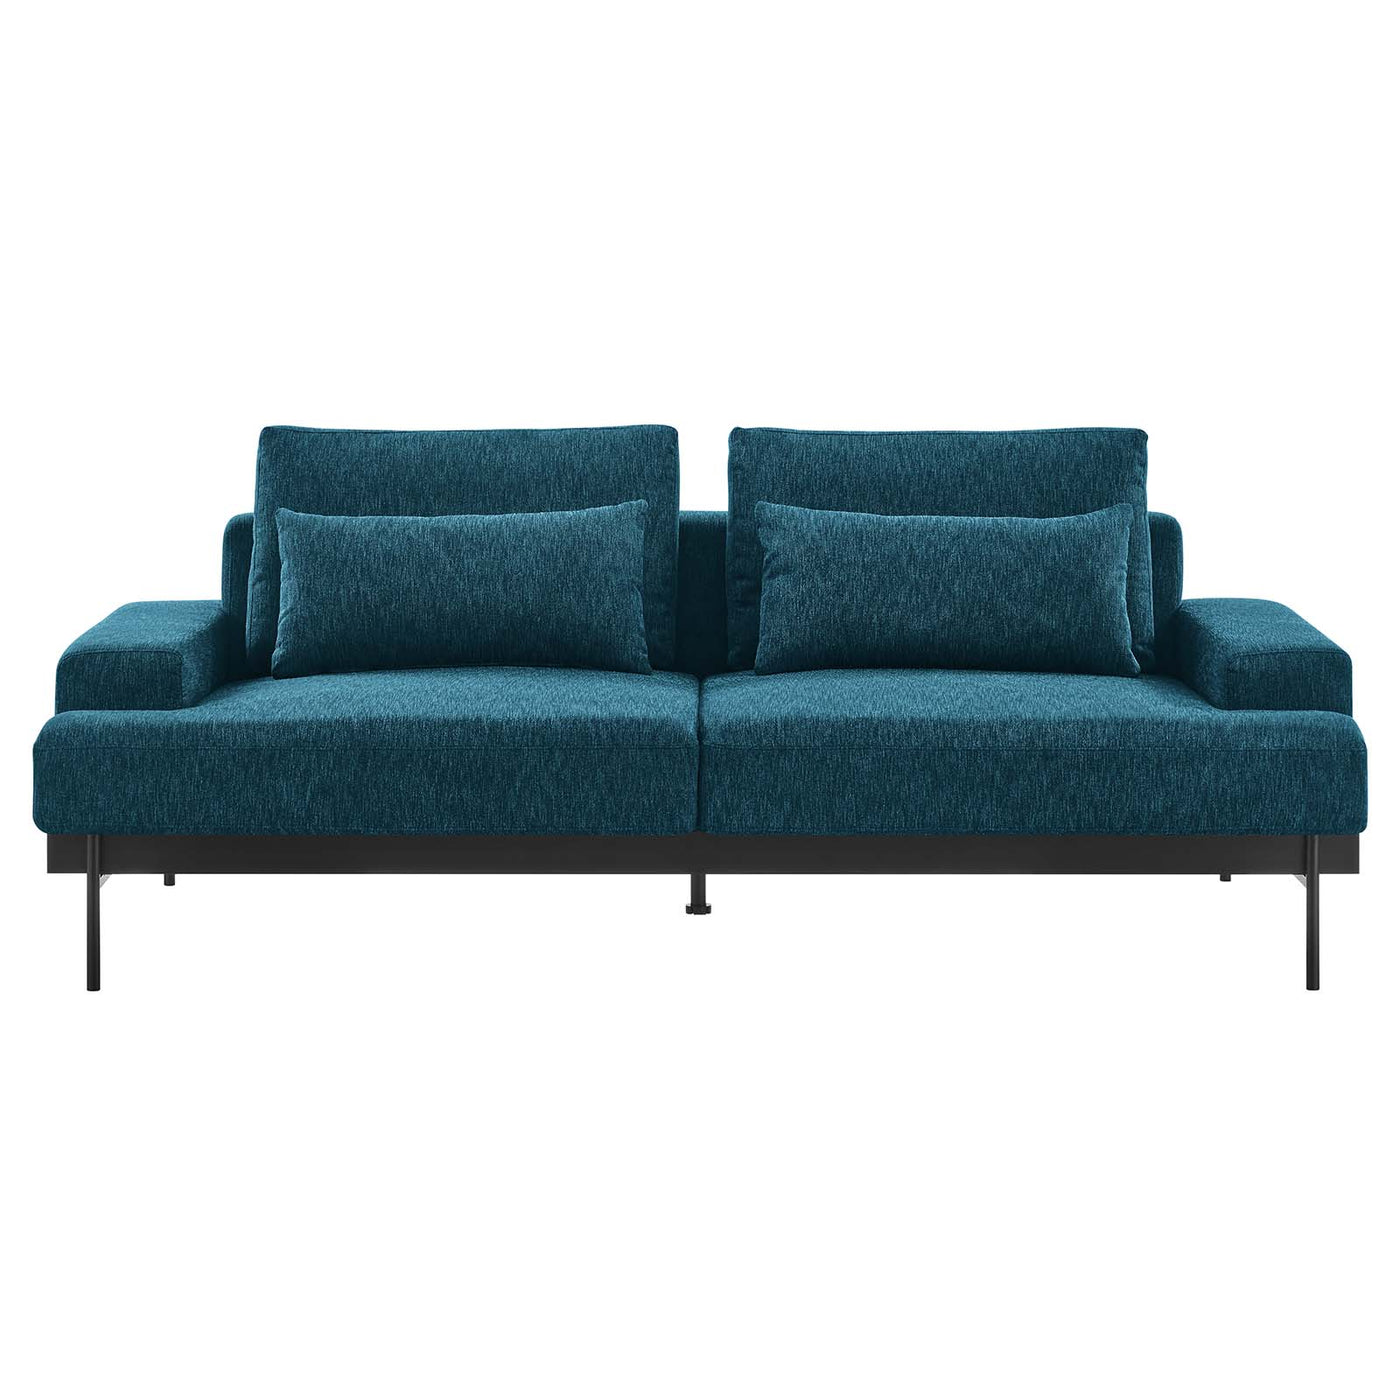 Proximity Upholstered Fabric Sofa